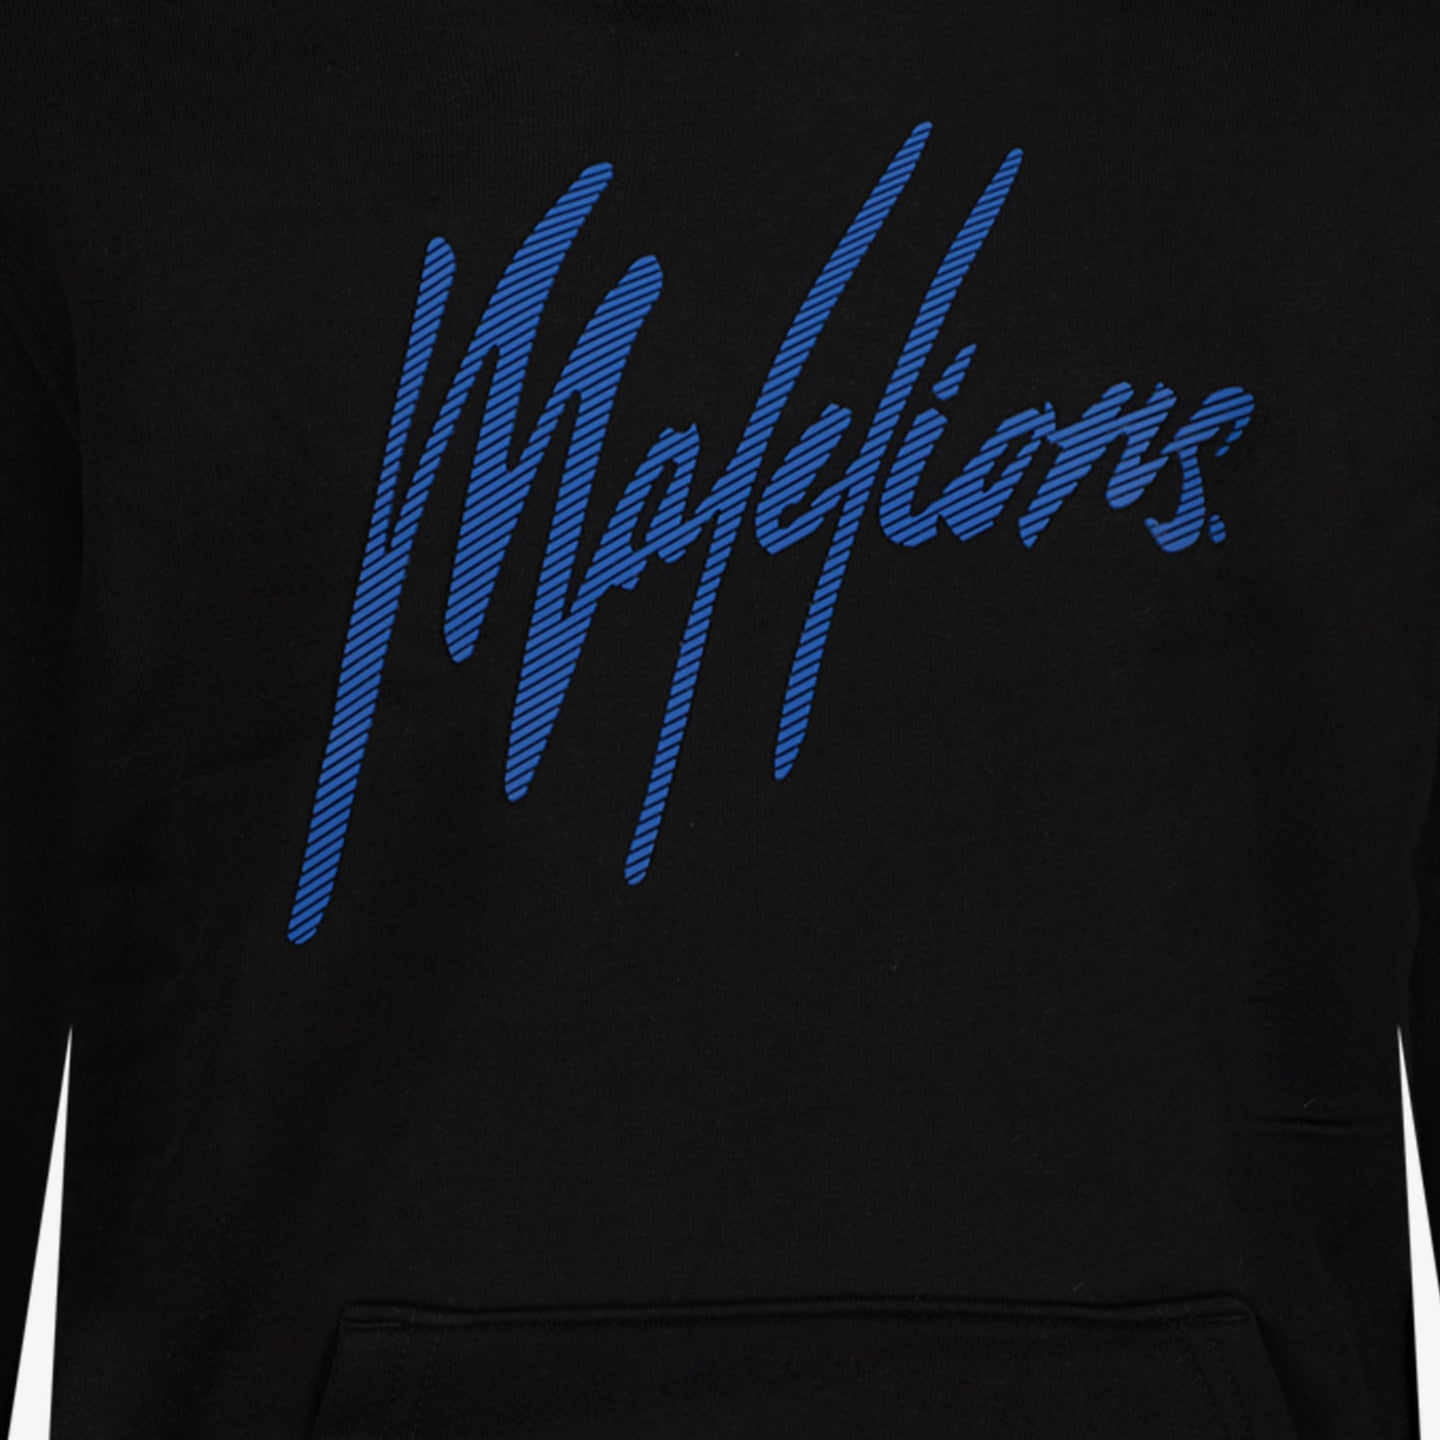 Malelions unisex sweater Black